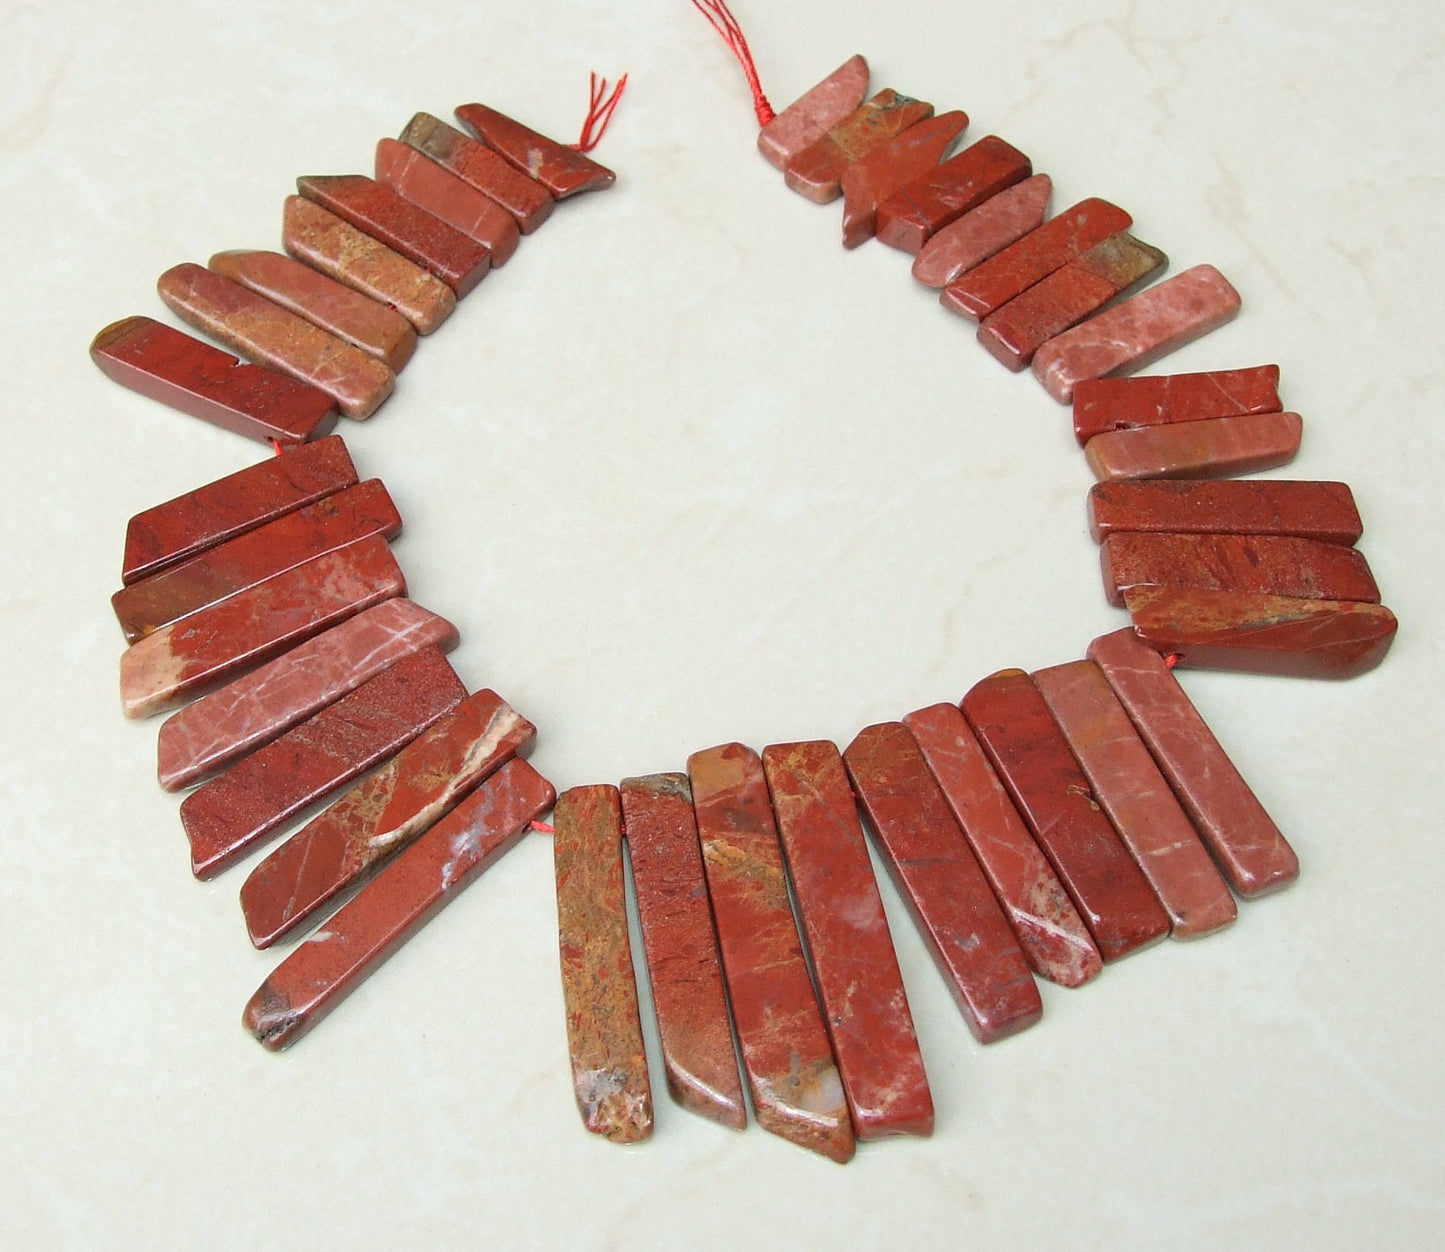 Red Jasper Pendant, Polished Slice, Jasper Beads, Jasper Slice, Gemstone Beads, Jasper Jewelry Stones Supplies, Half Strand - 30m to 45+mm